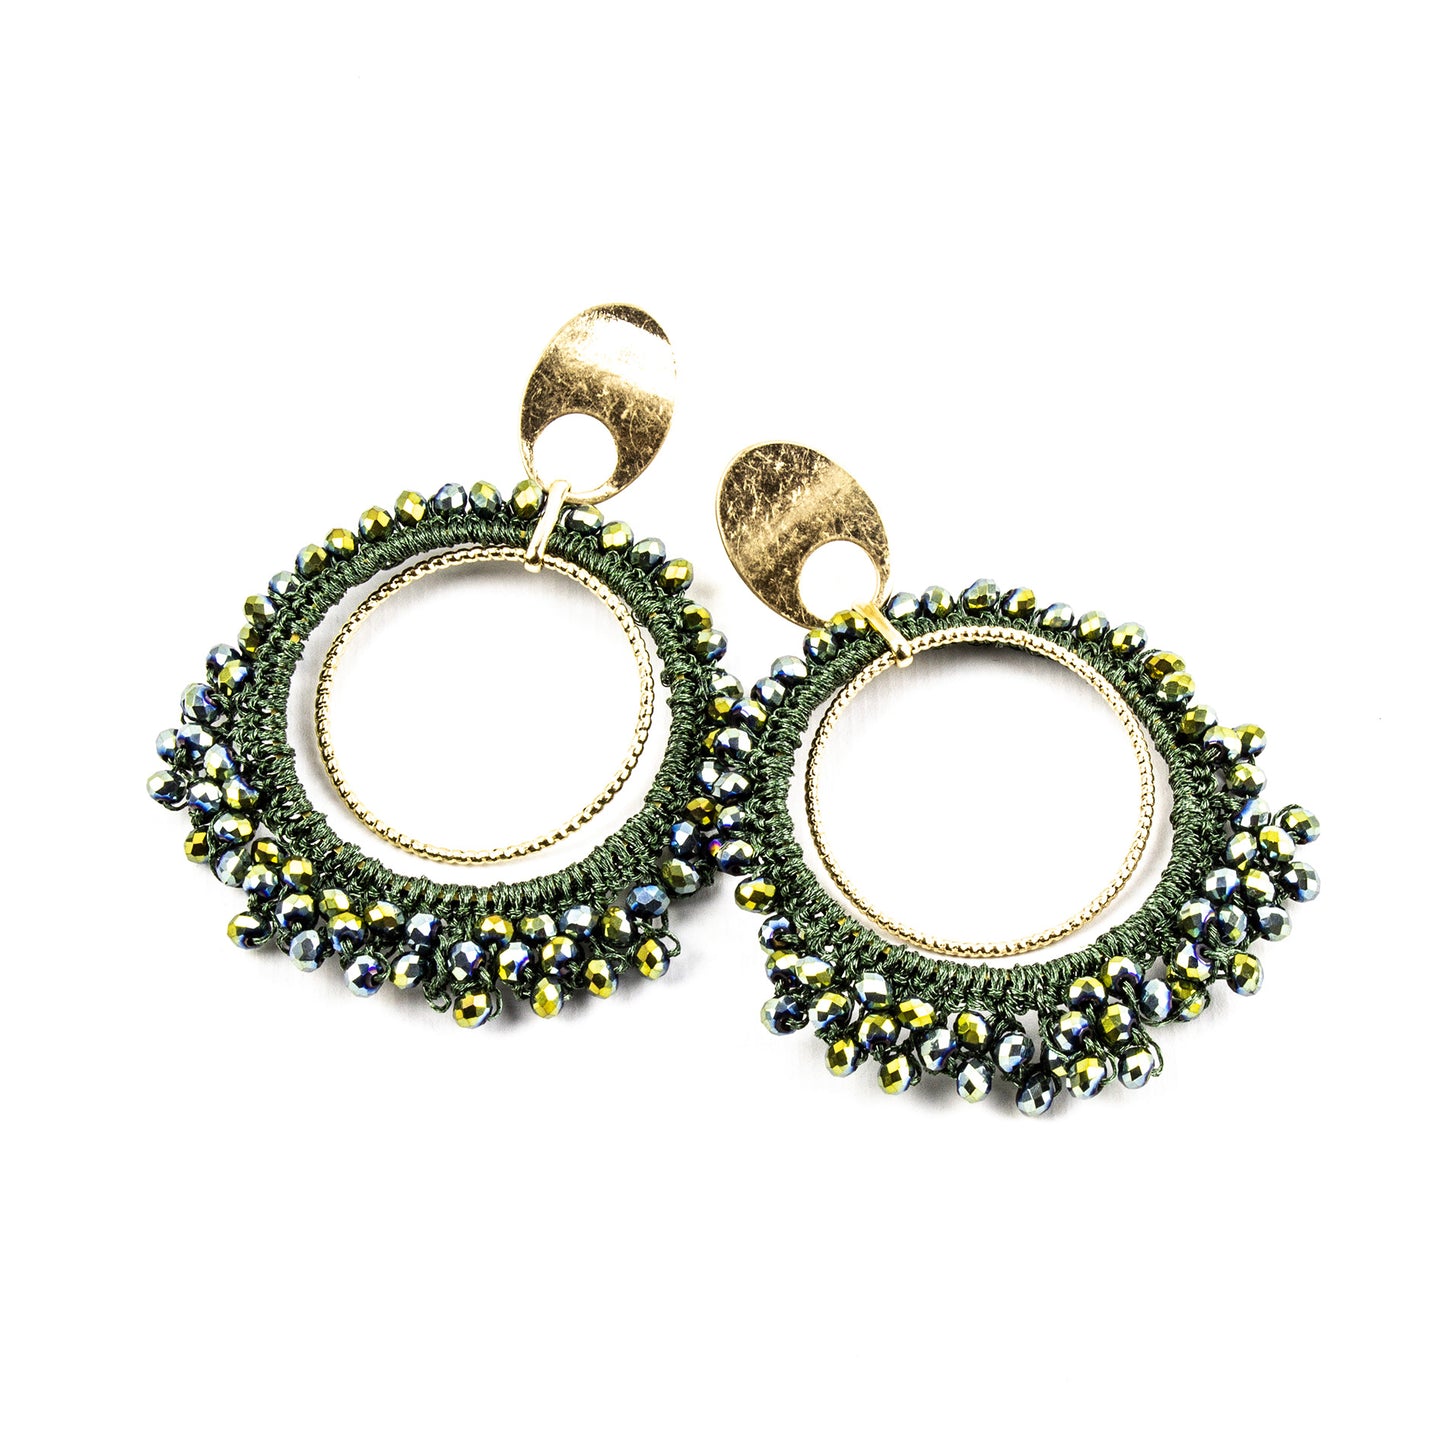 Maria Antonietta earrings